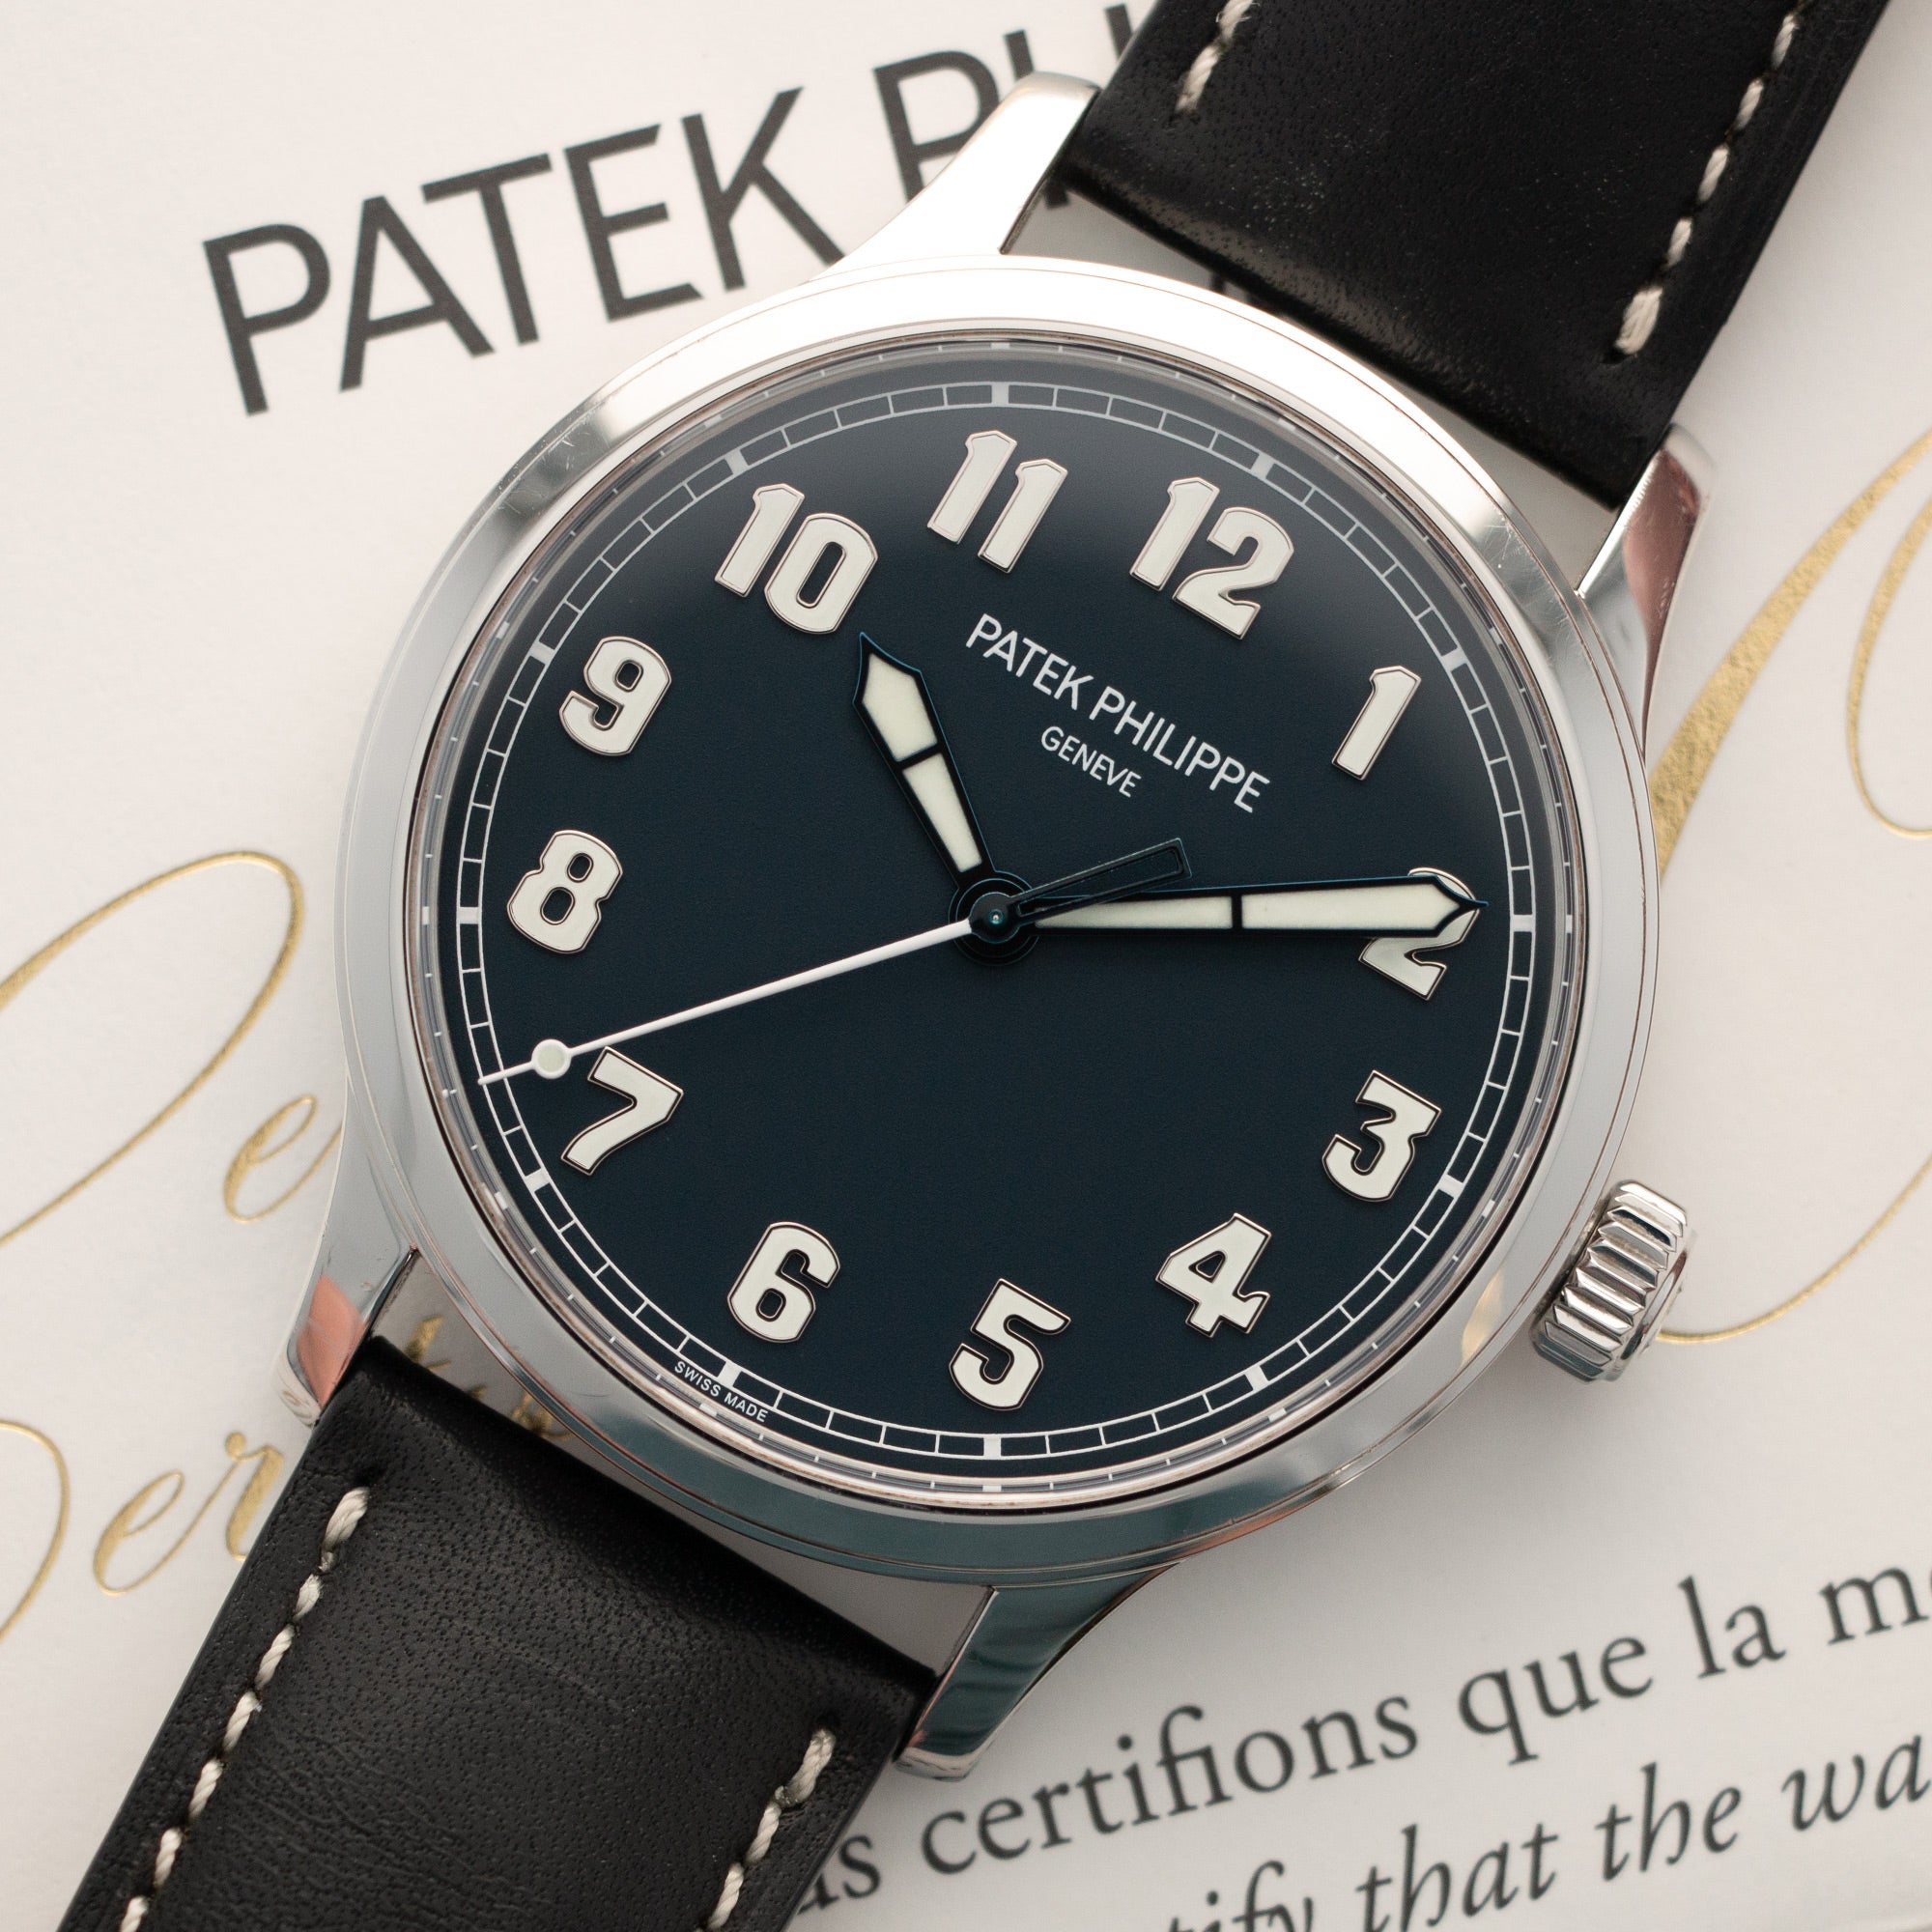 Patek Philippe - Patek Philippe Pilot Calatrava Limited New York Edition Watch Ref. 5522 - The Keystone Watches